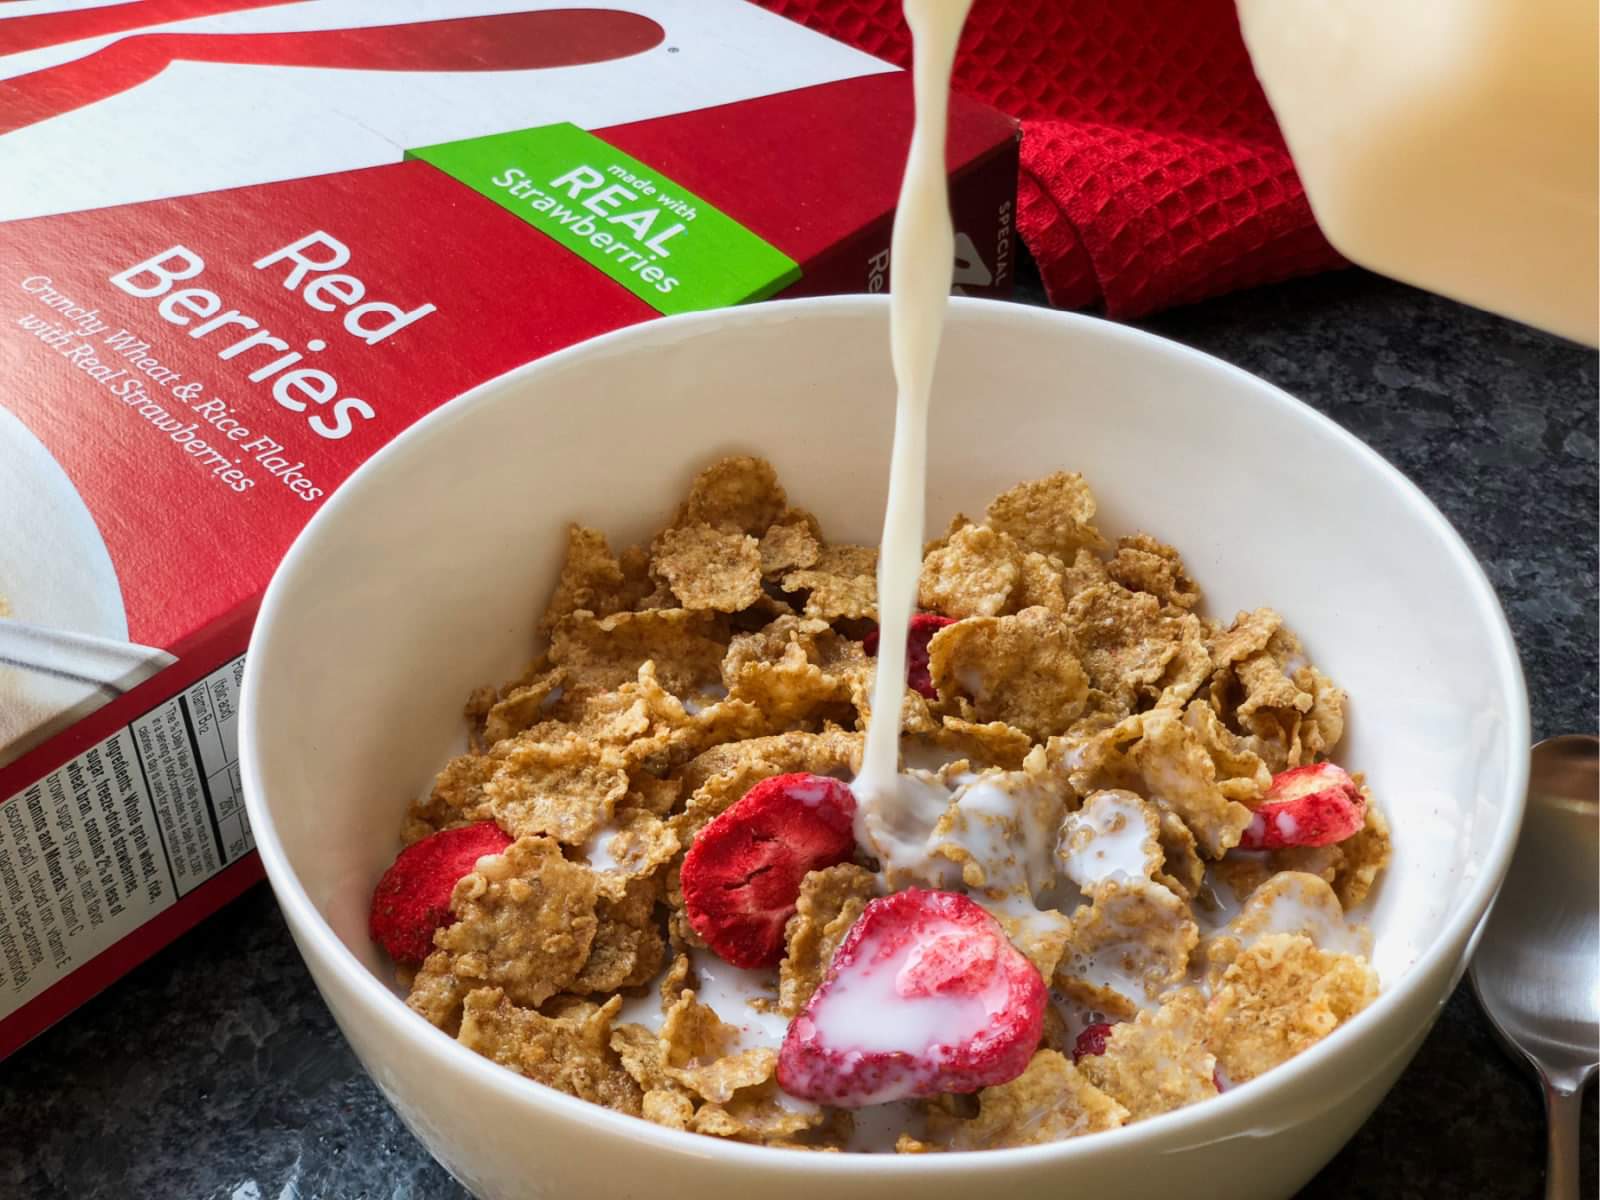 Kellogg's Special K, Breakfast Cereal, Original, Made with Folic